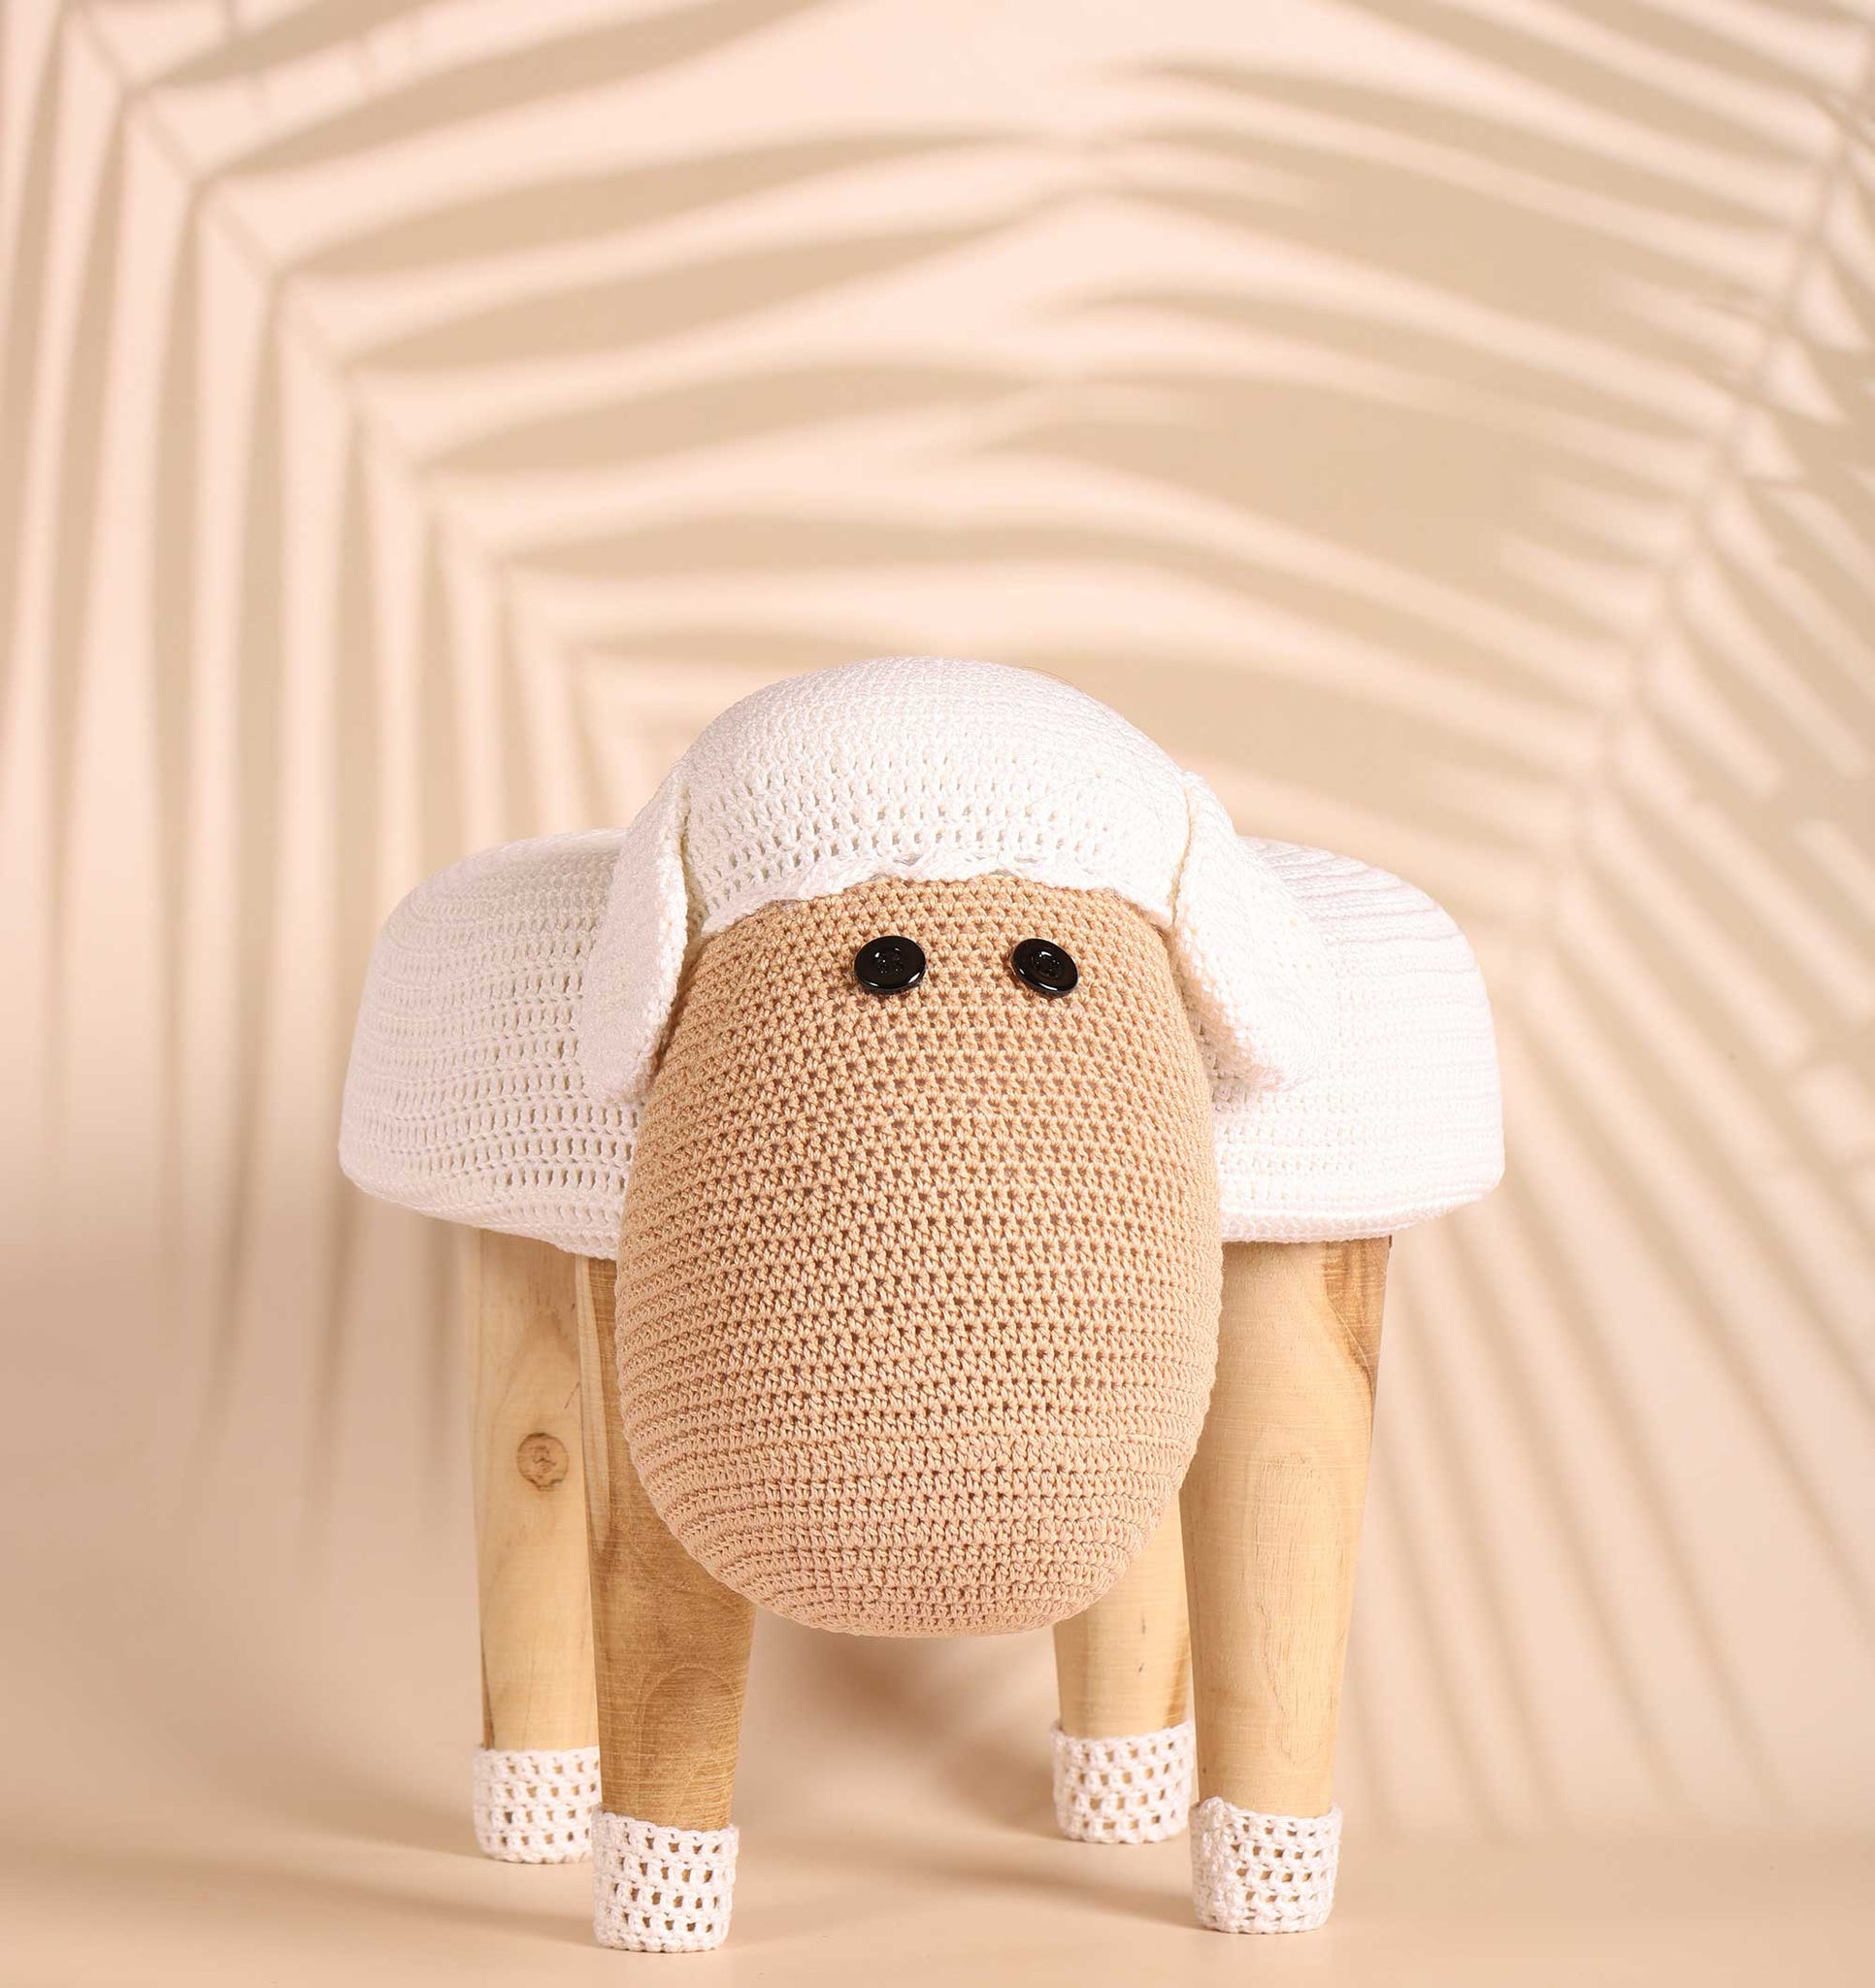 Sheep Shaped Sangwan Wood Stool For Kids - Crochet - 10 x 9 inches | Peacoy